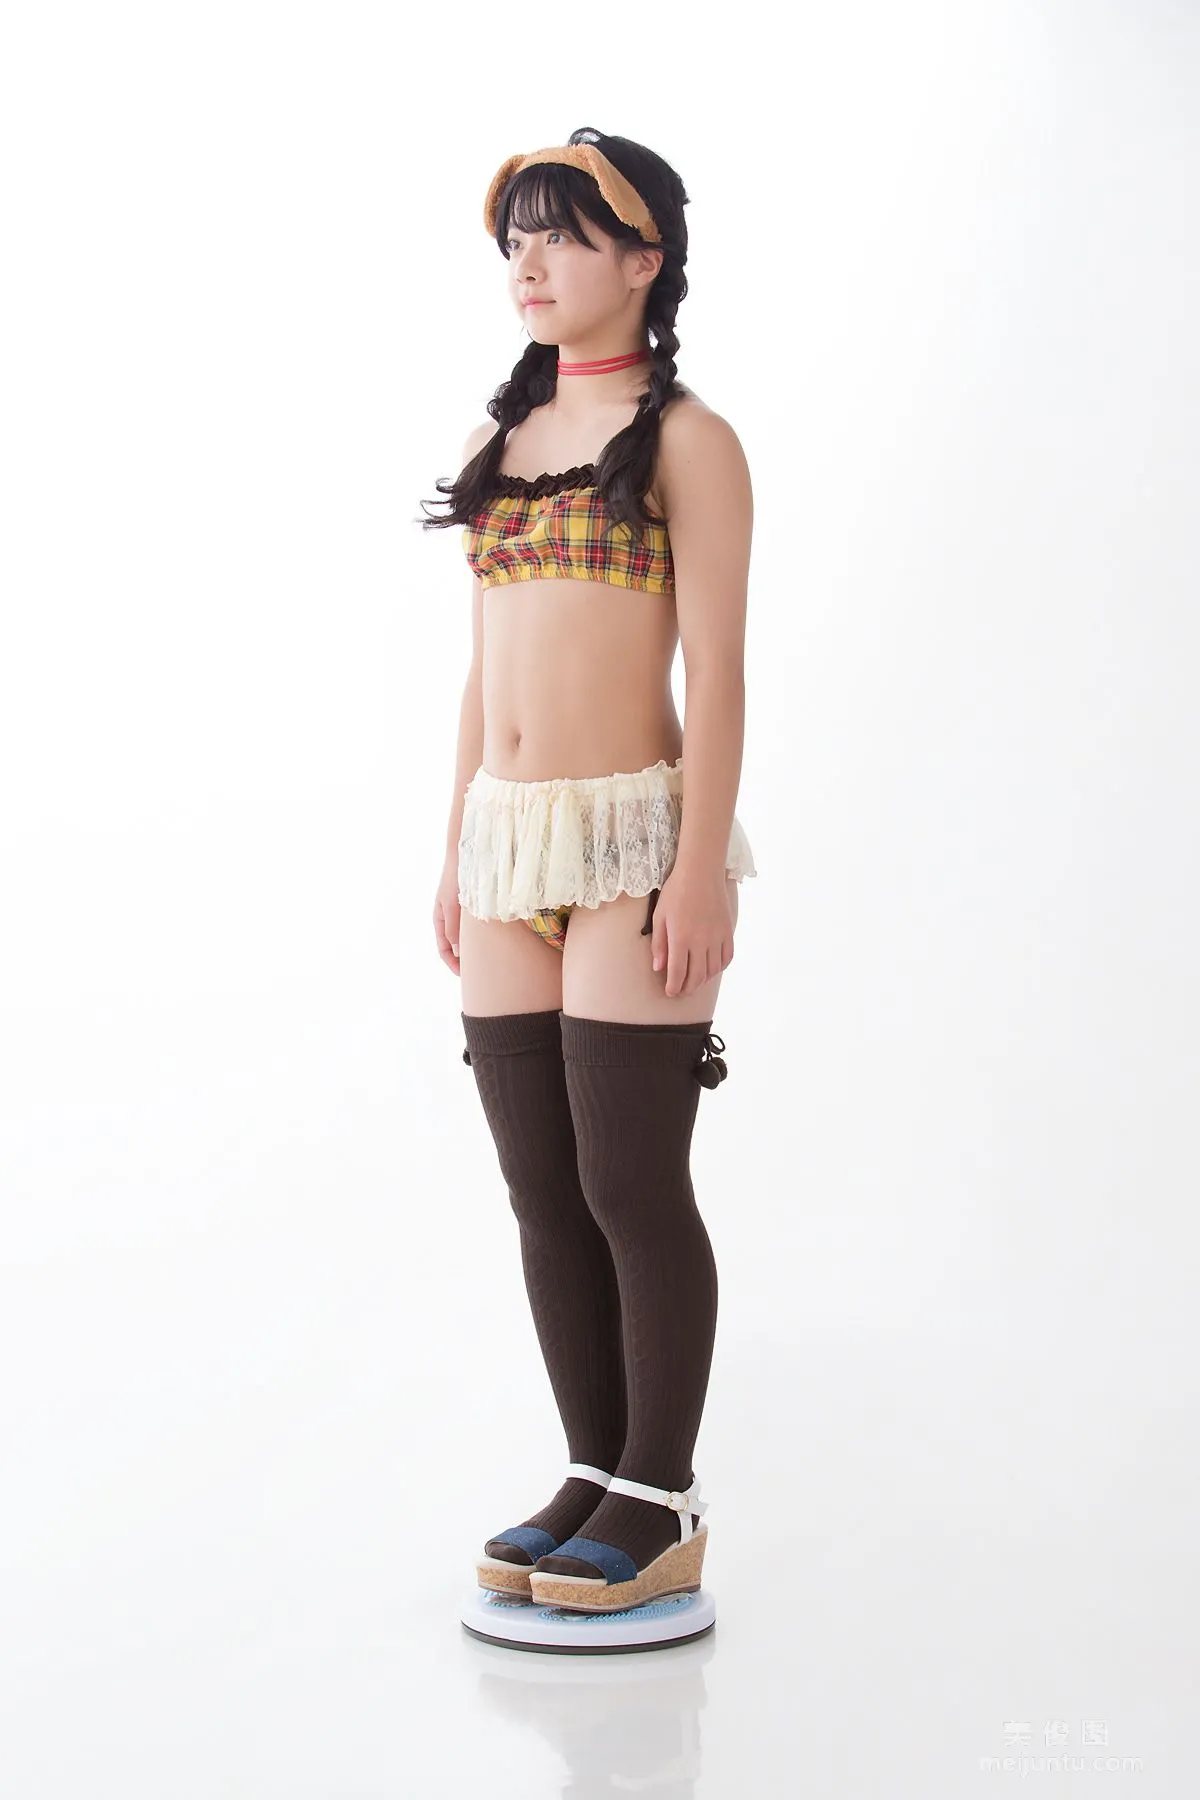 [Minisuka.tv] Saria Natsume 夏目咲莉愛 - Premium Gallery 2.5 写真套图2